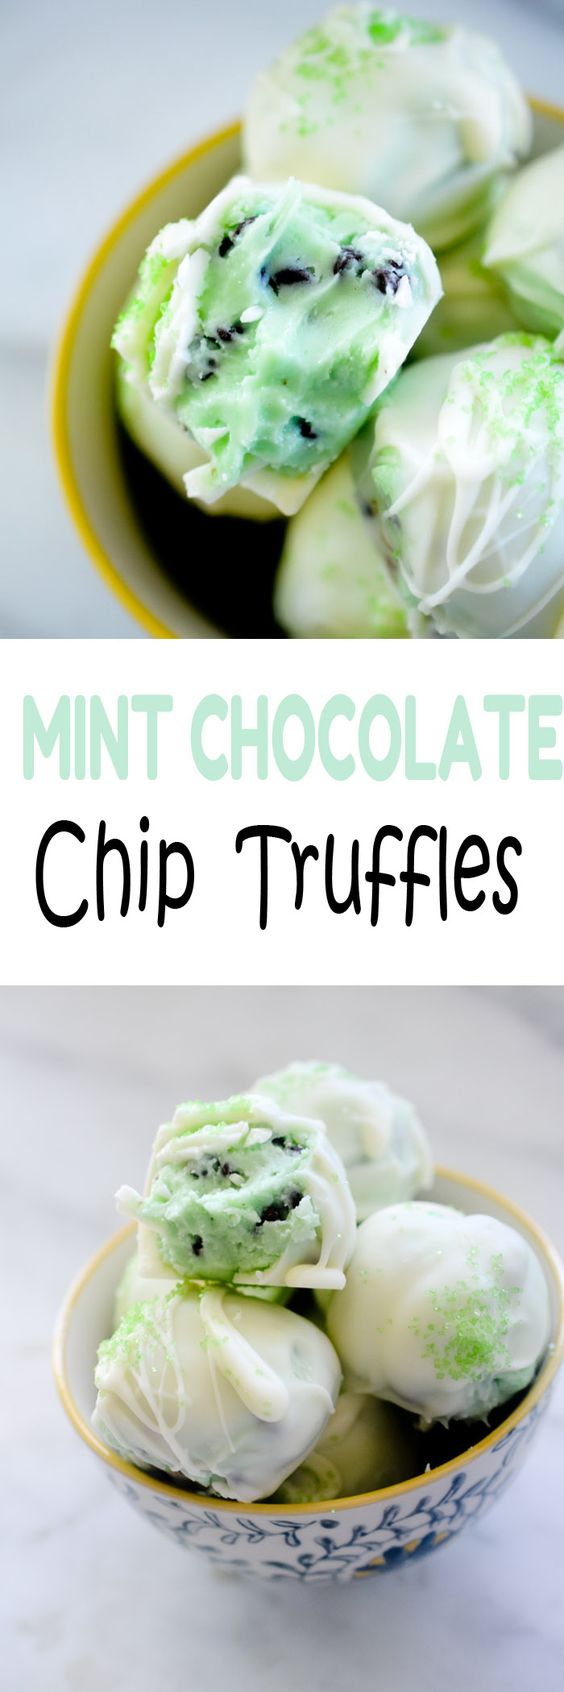 Mint chocolate chip truffles